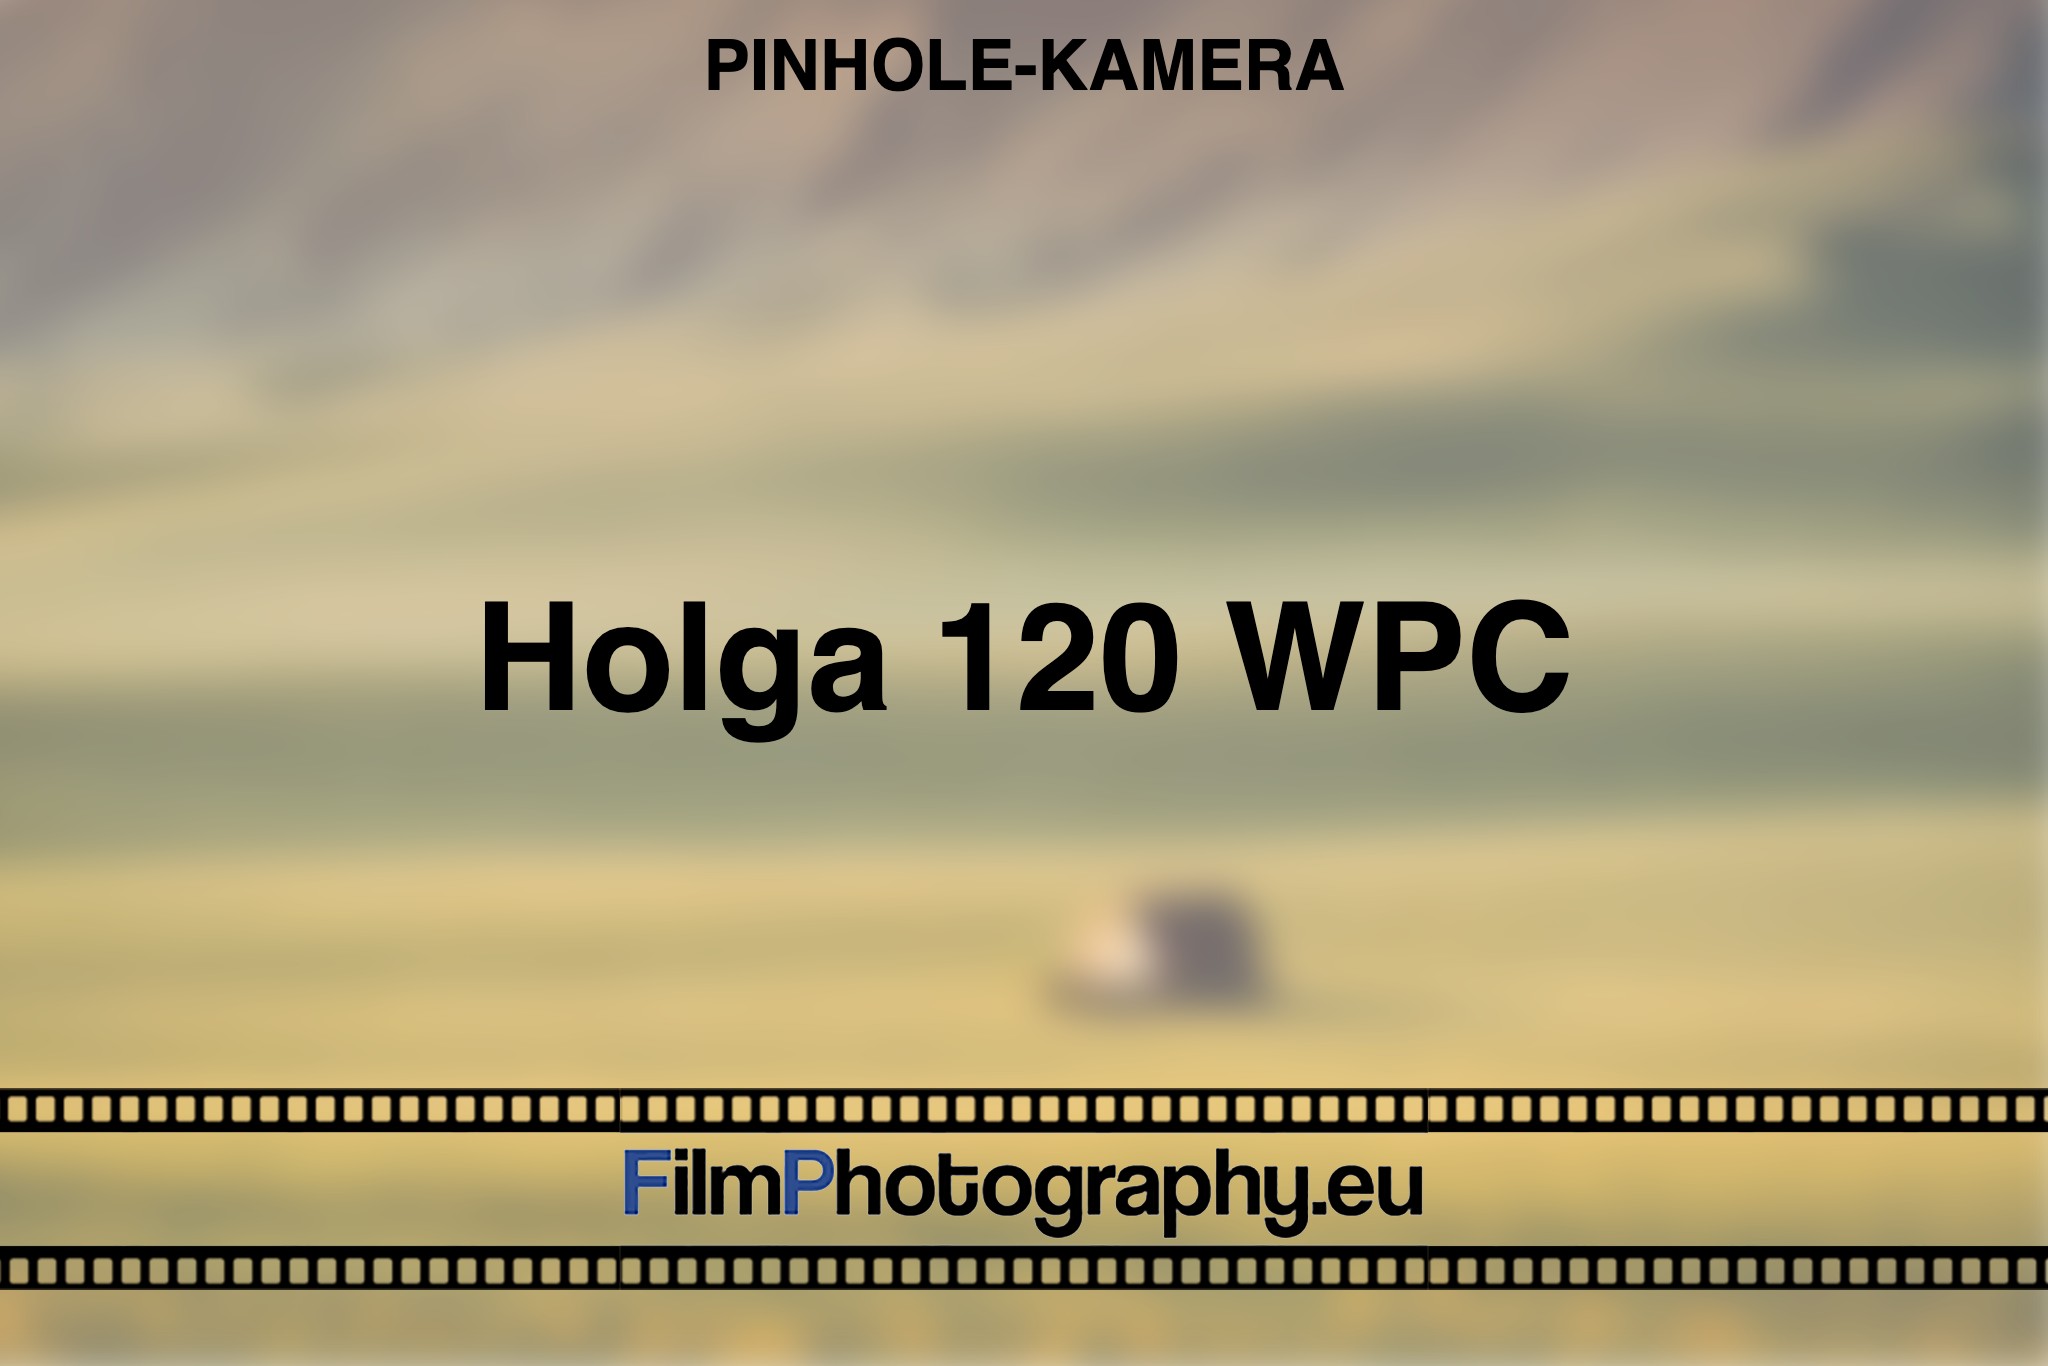 holga-120-wpc-pinhole-kamera-bnv